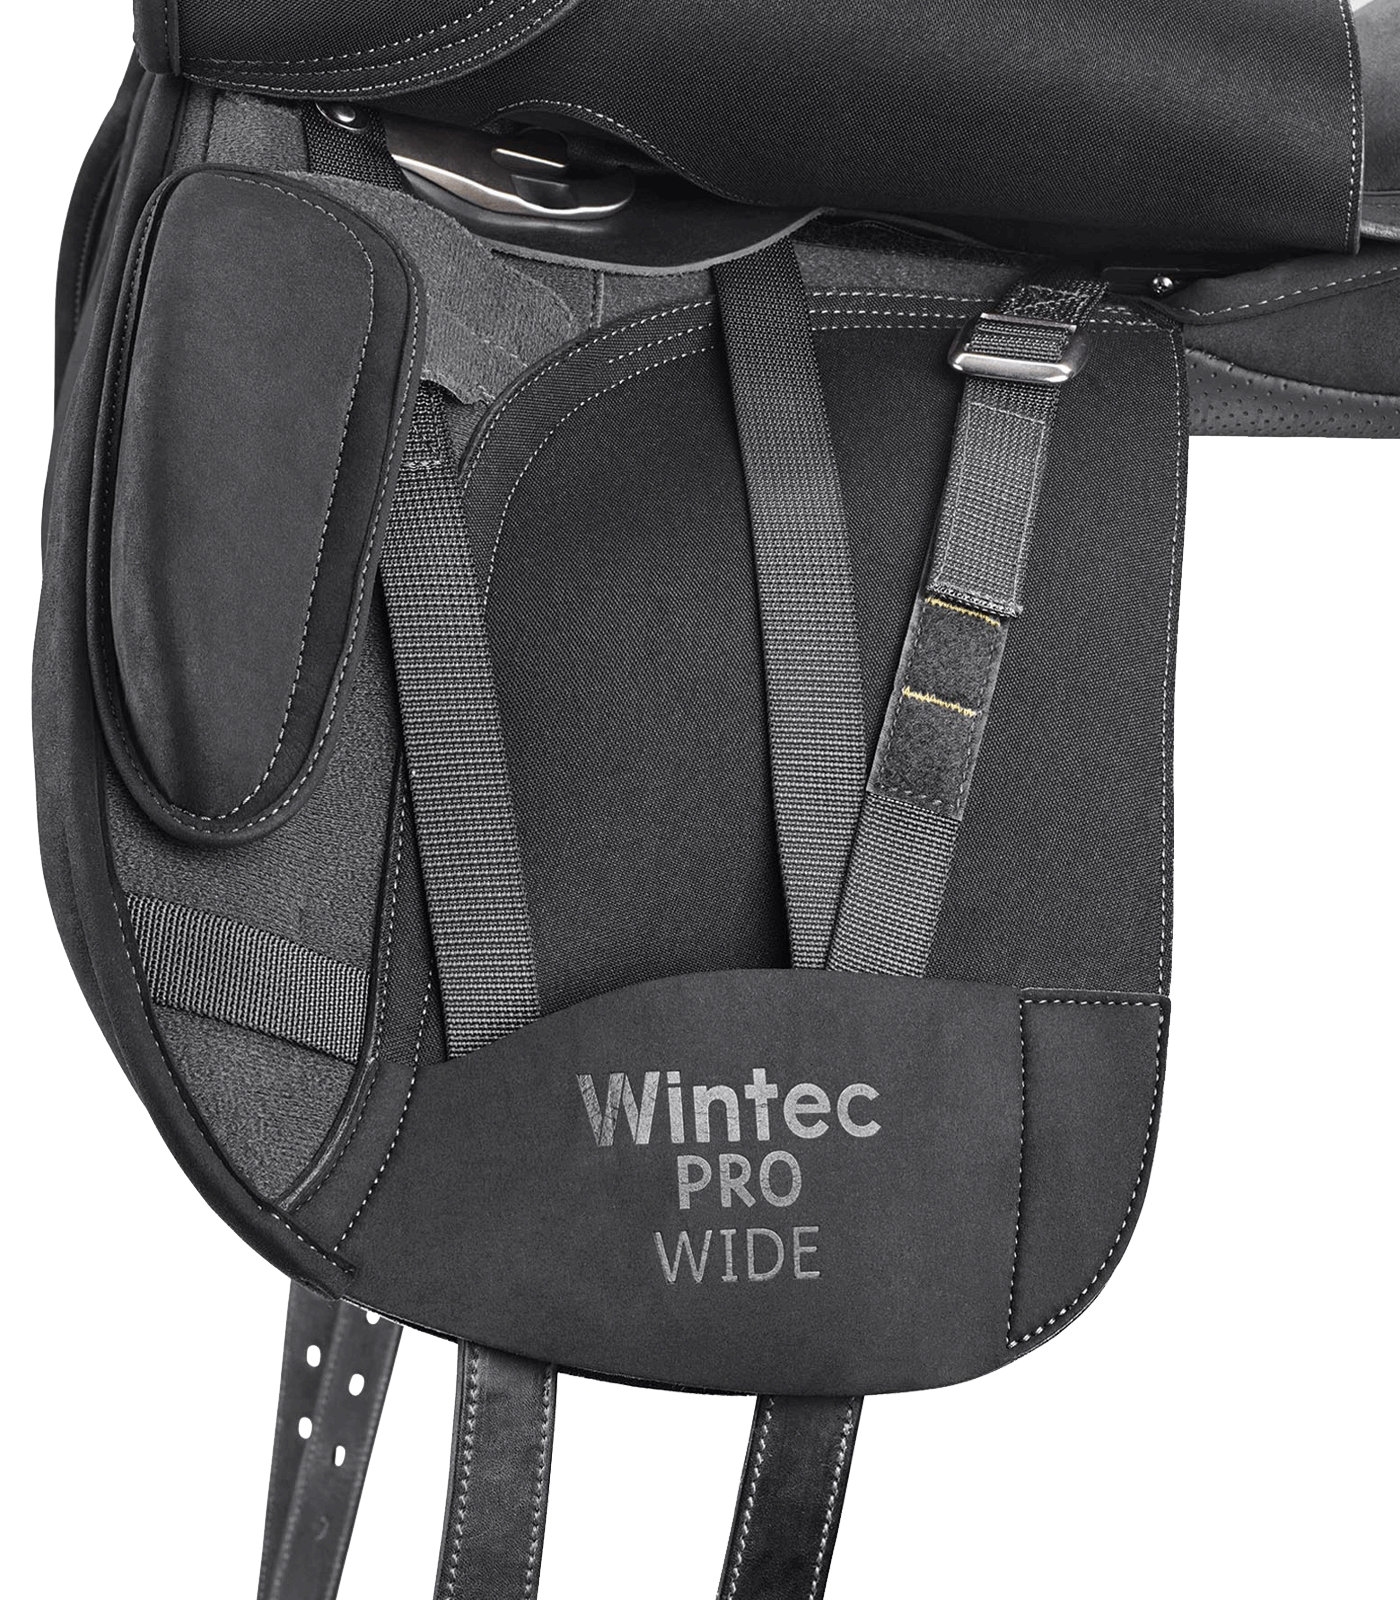 Wintec Pro Dressage saddle, wide